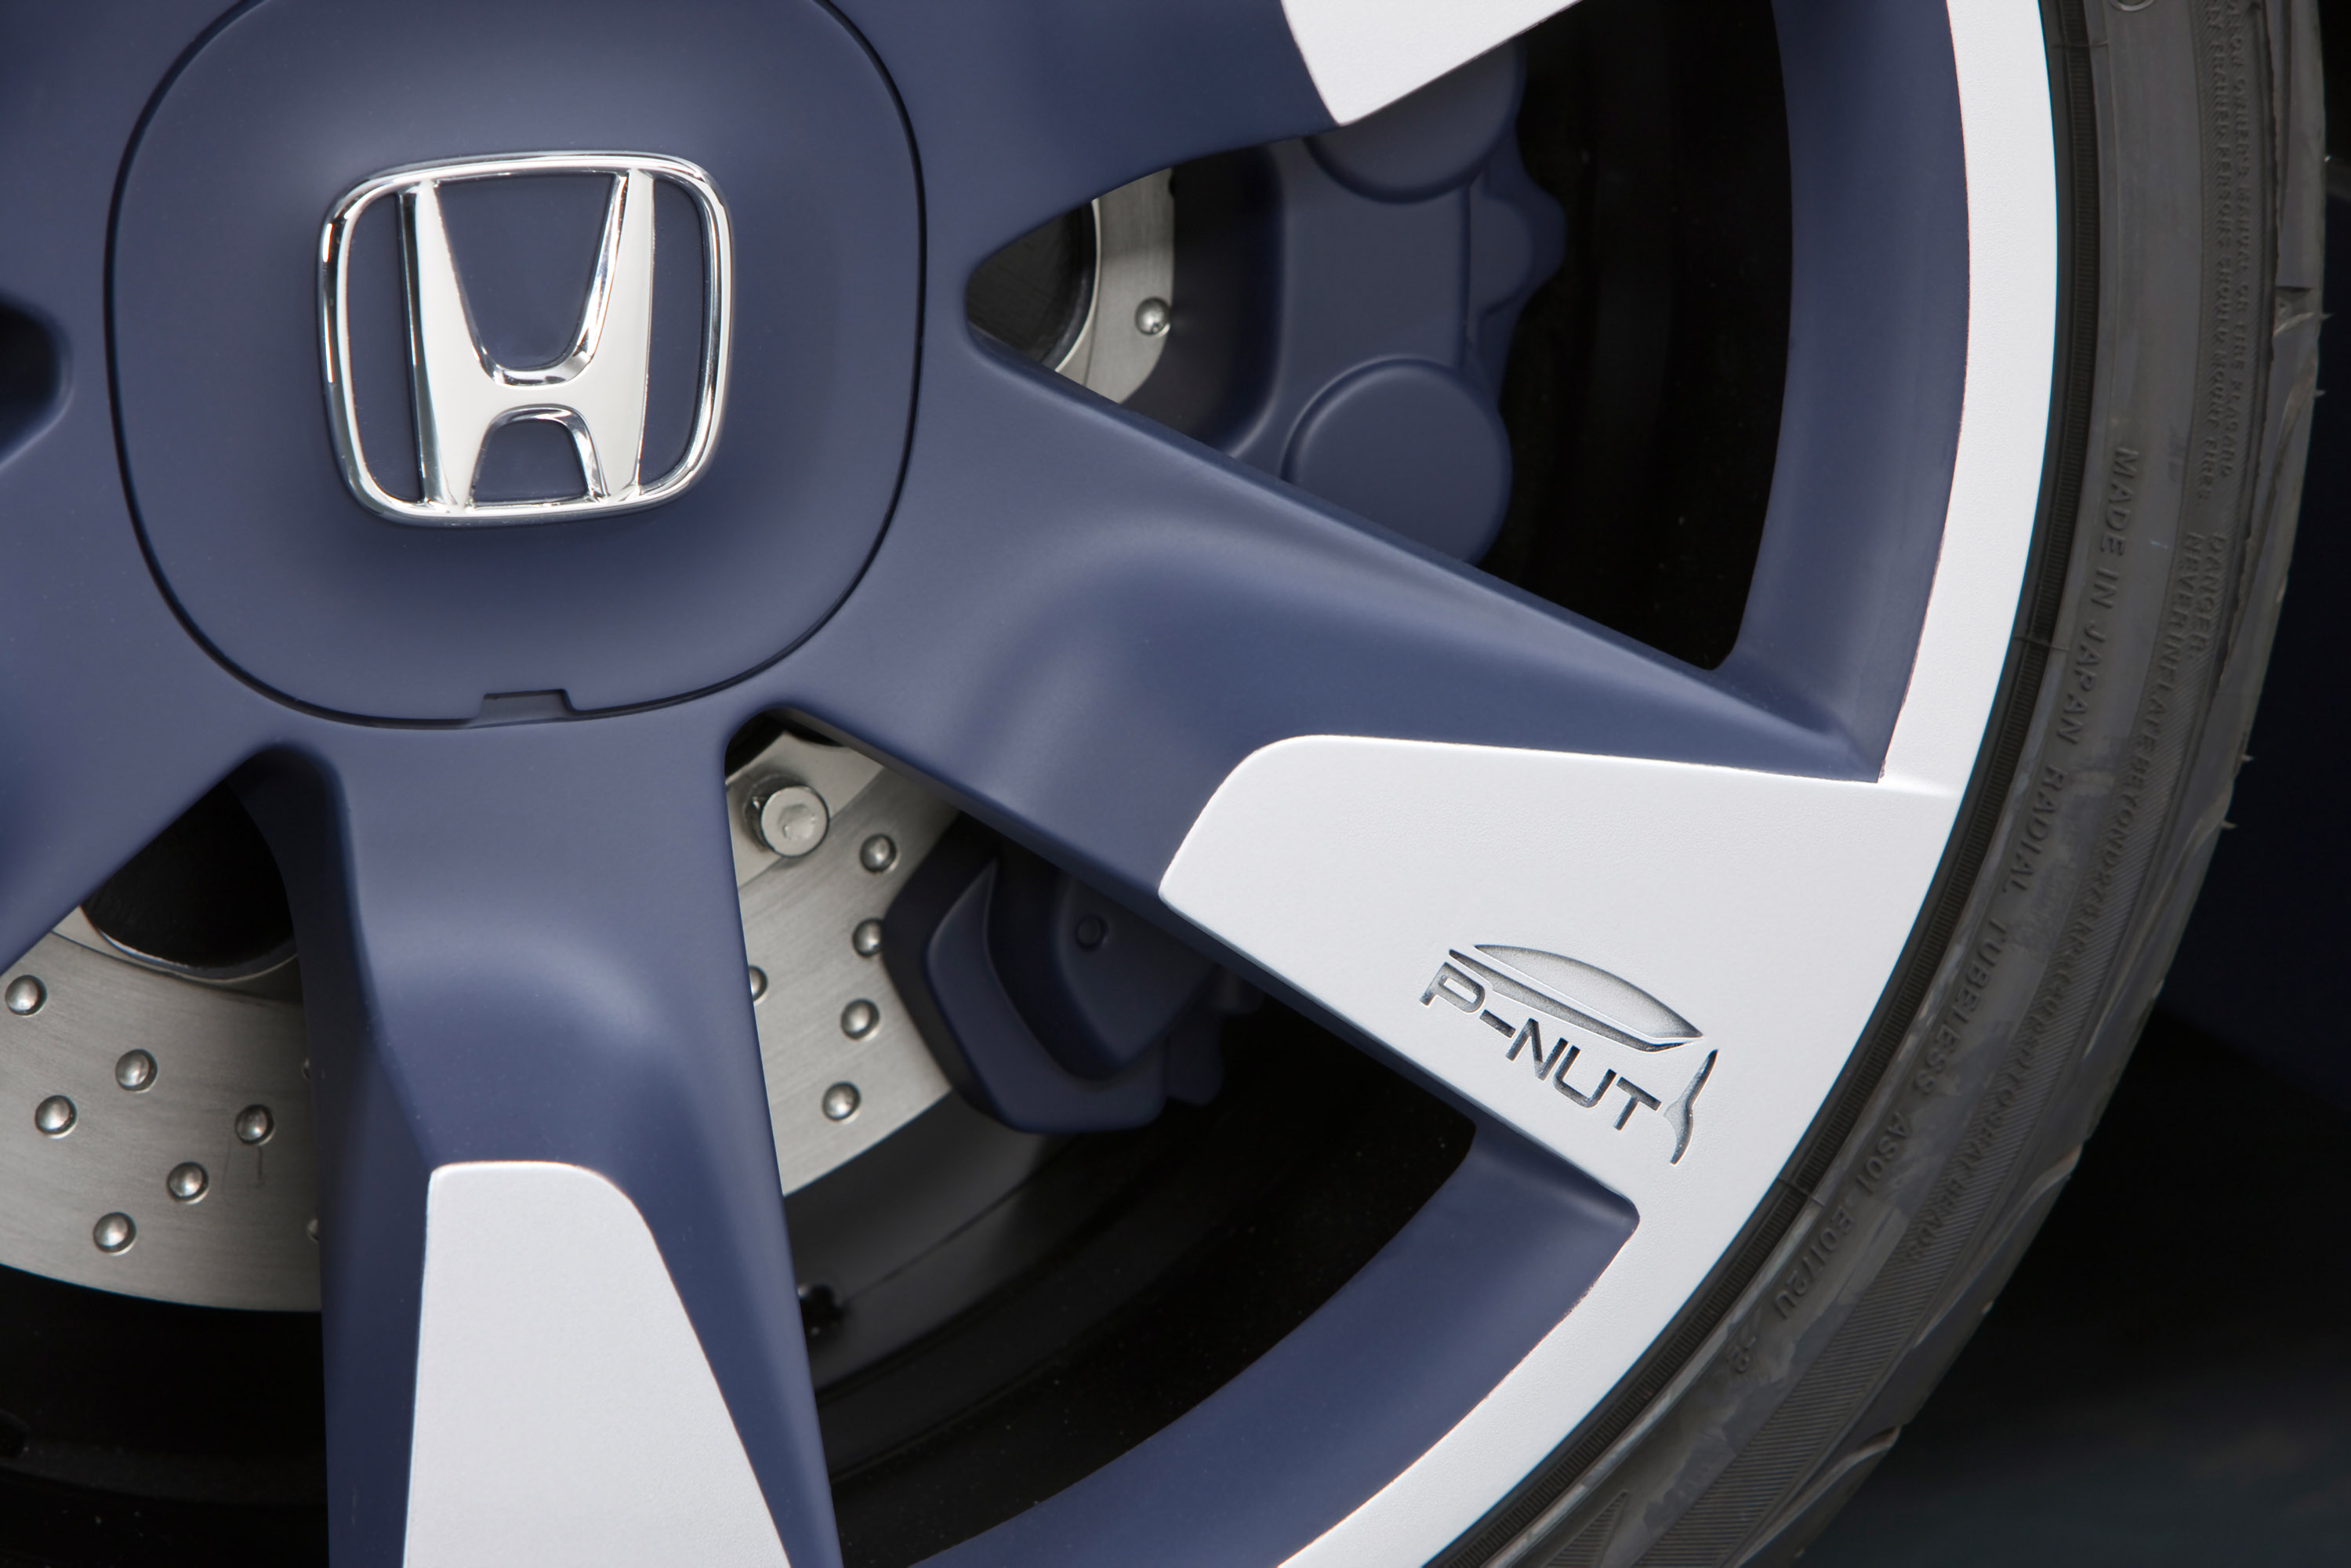 Honda p-nut Concept. Small footprint, big Space - Honda p-nut Concept.